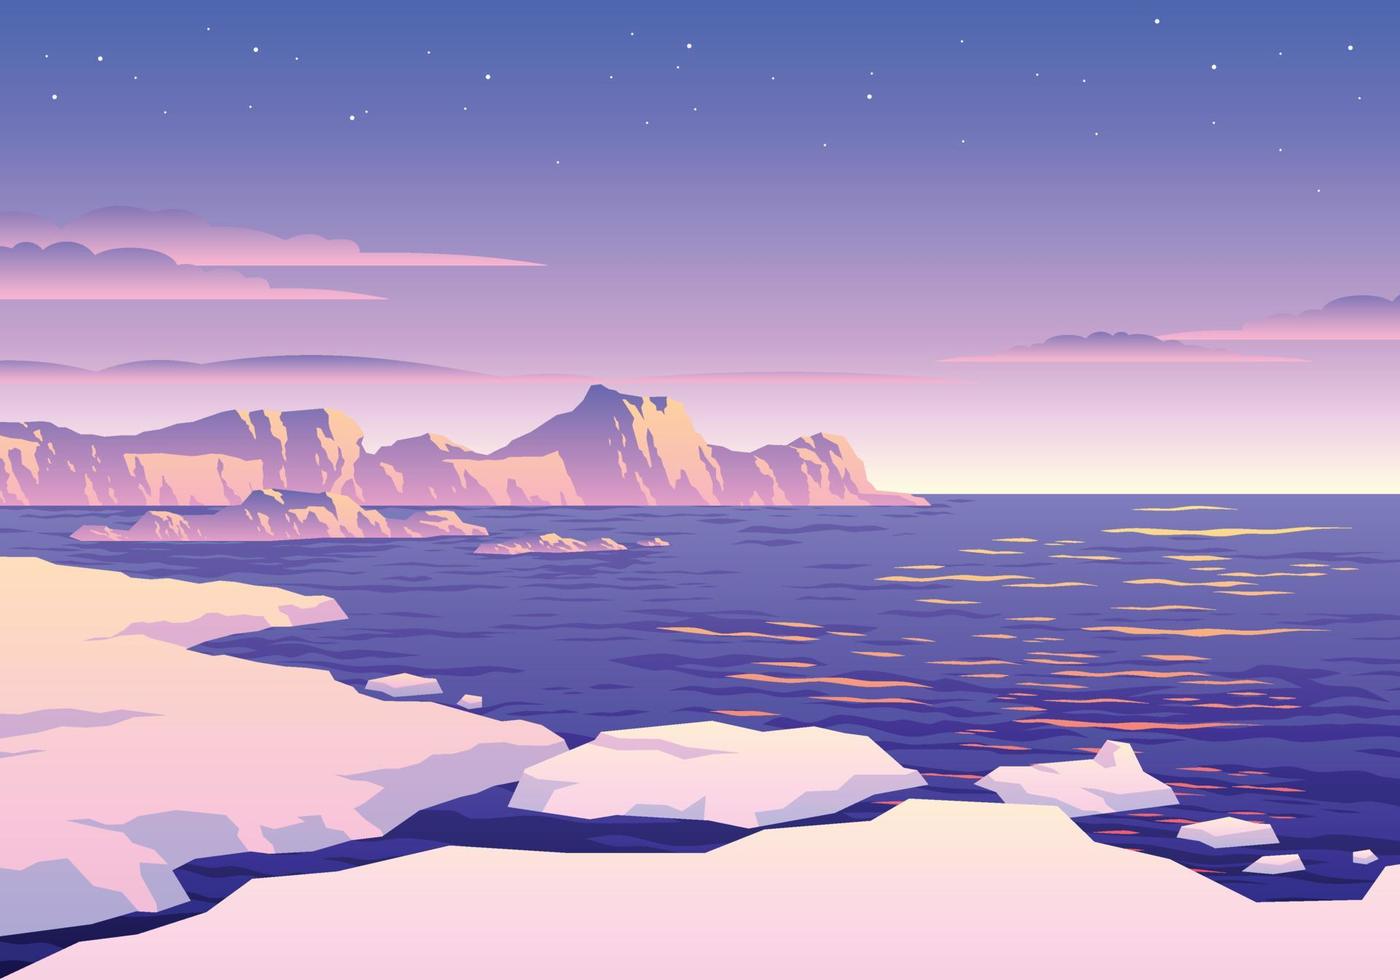 Beautiful Sunset South Pole Iceberg Landscape Illustration vector